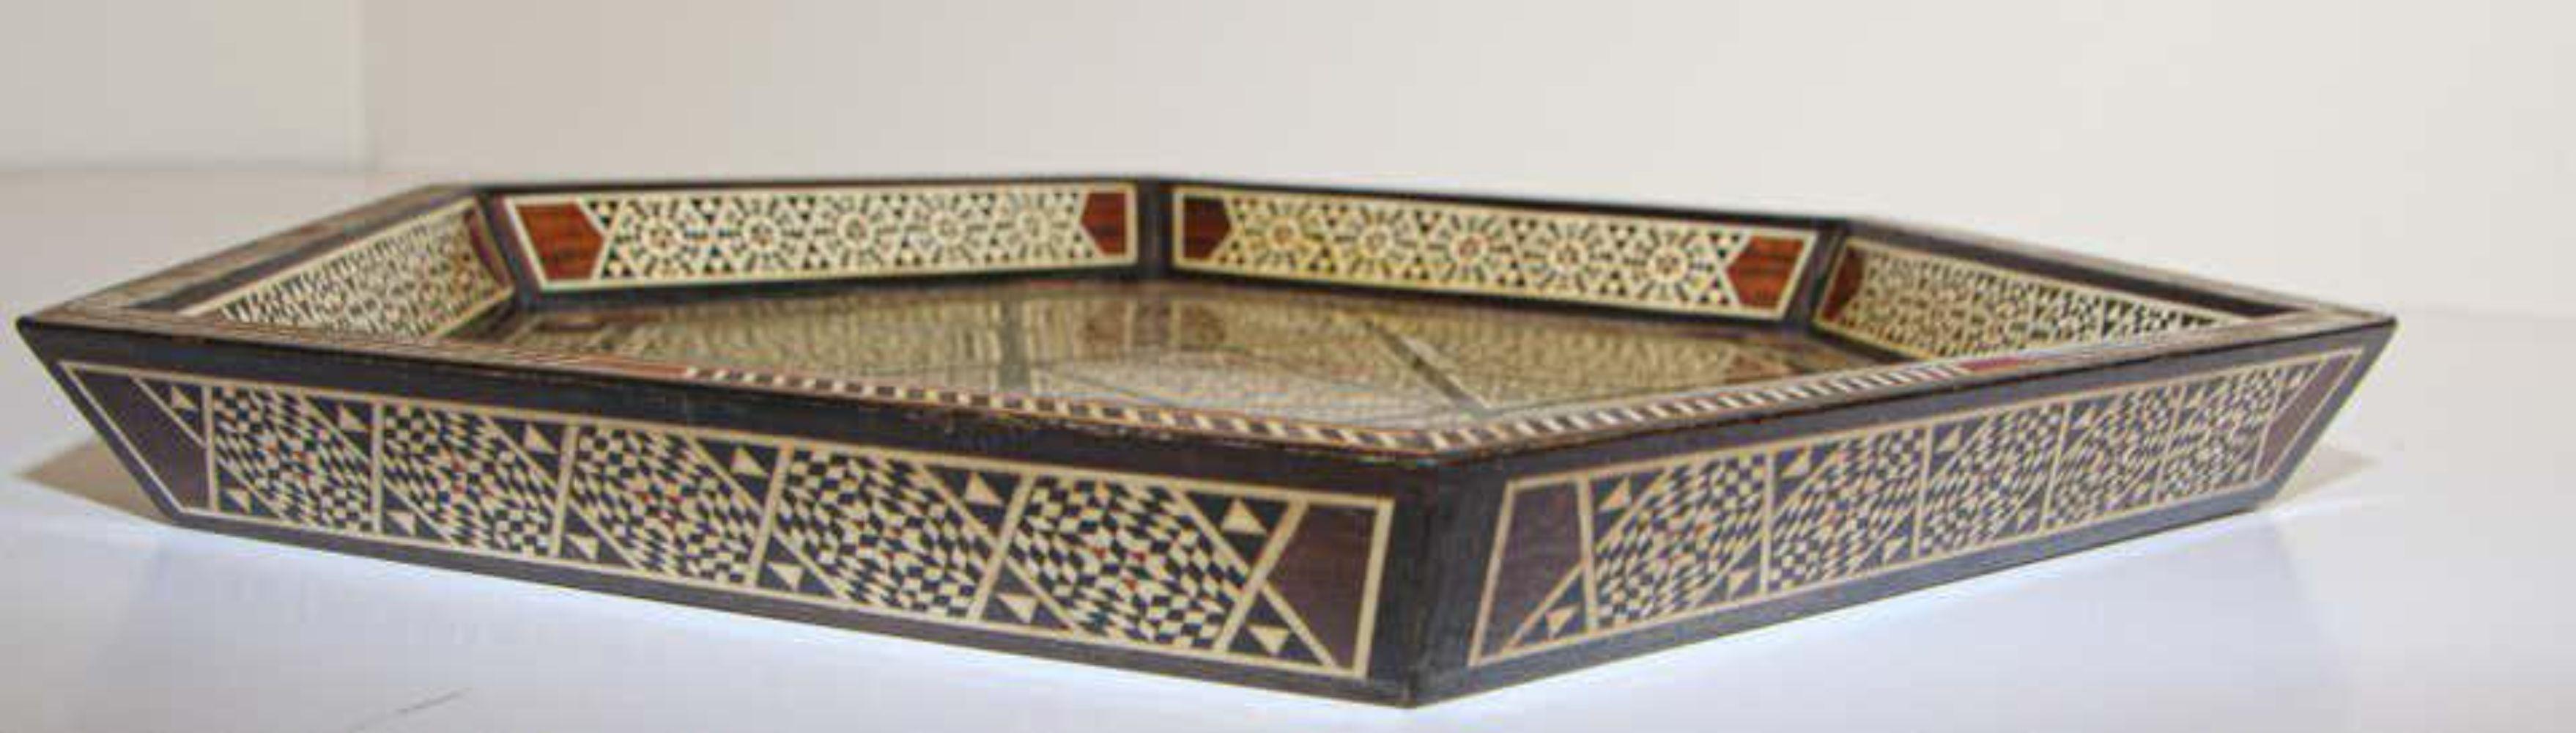 Moorish Middle Eastern Inlaid Octagonal Serving Tray